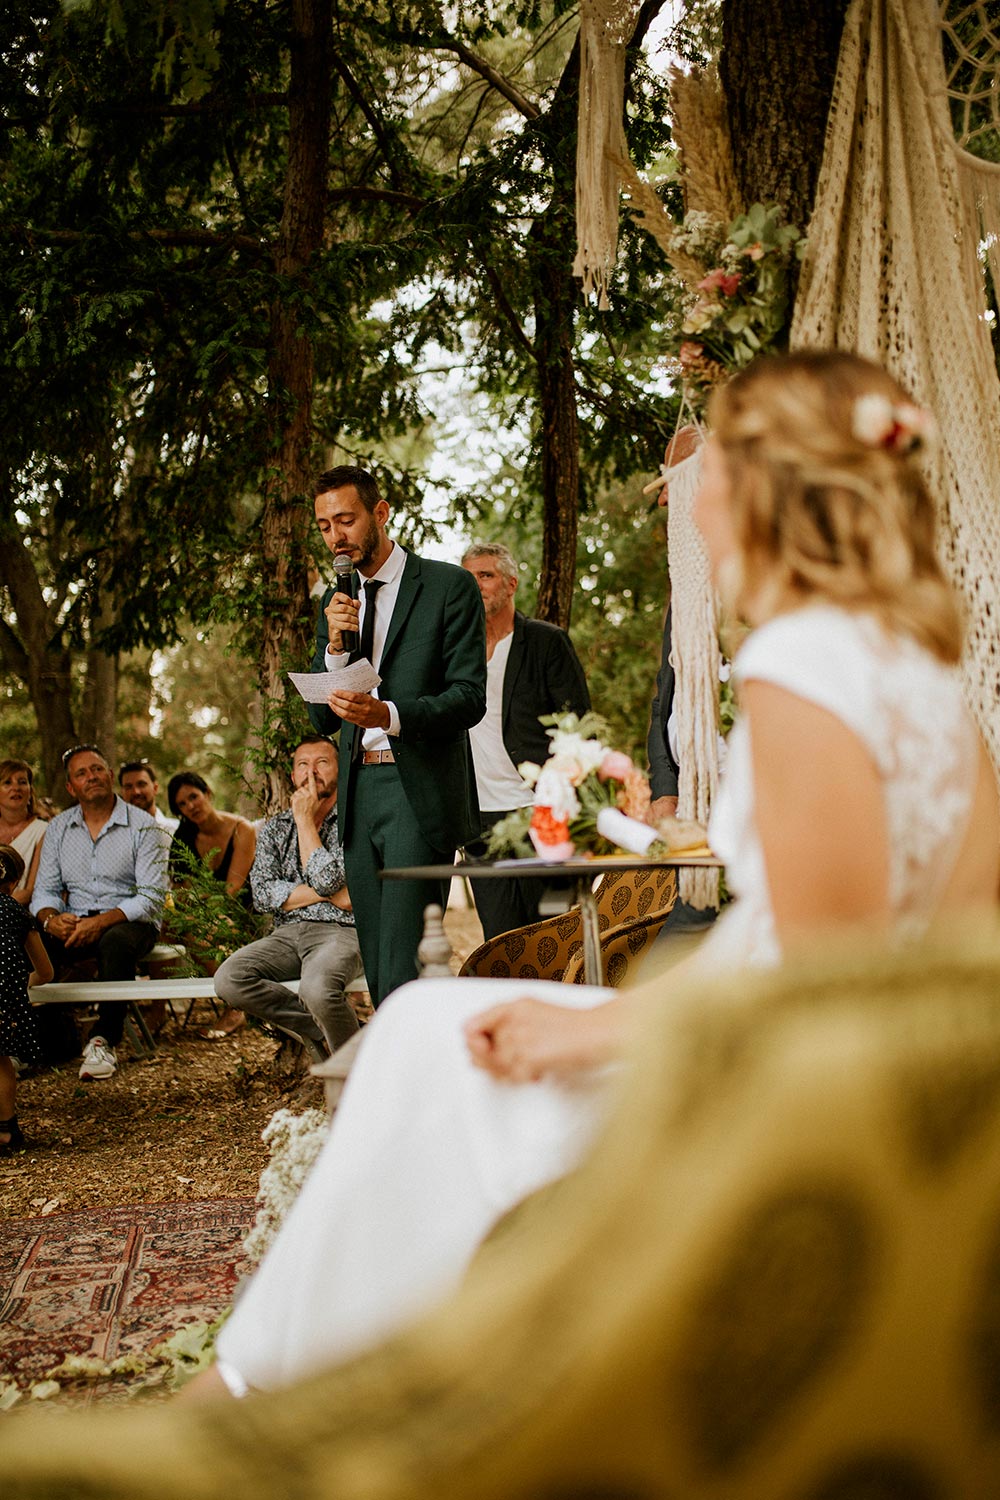 Boho folk wedding in Provence • Mélanie Bultez - Photographe